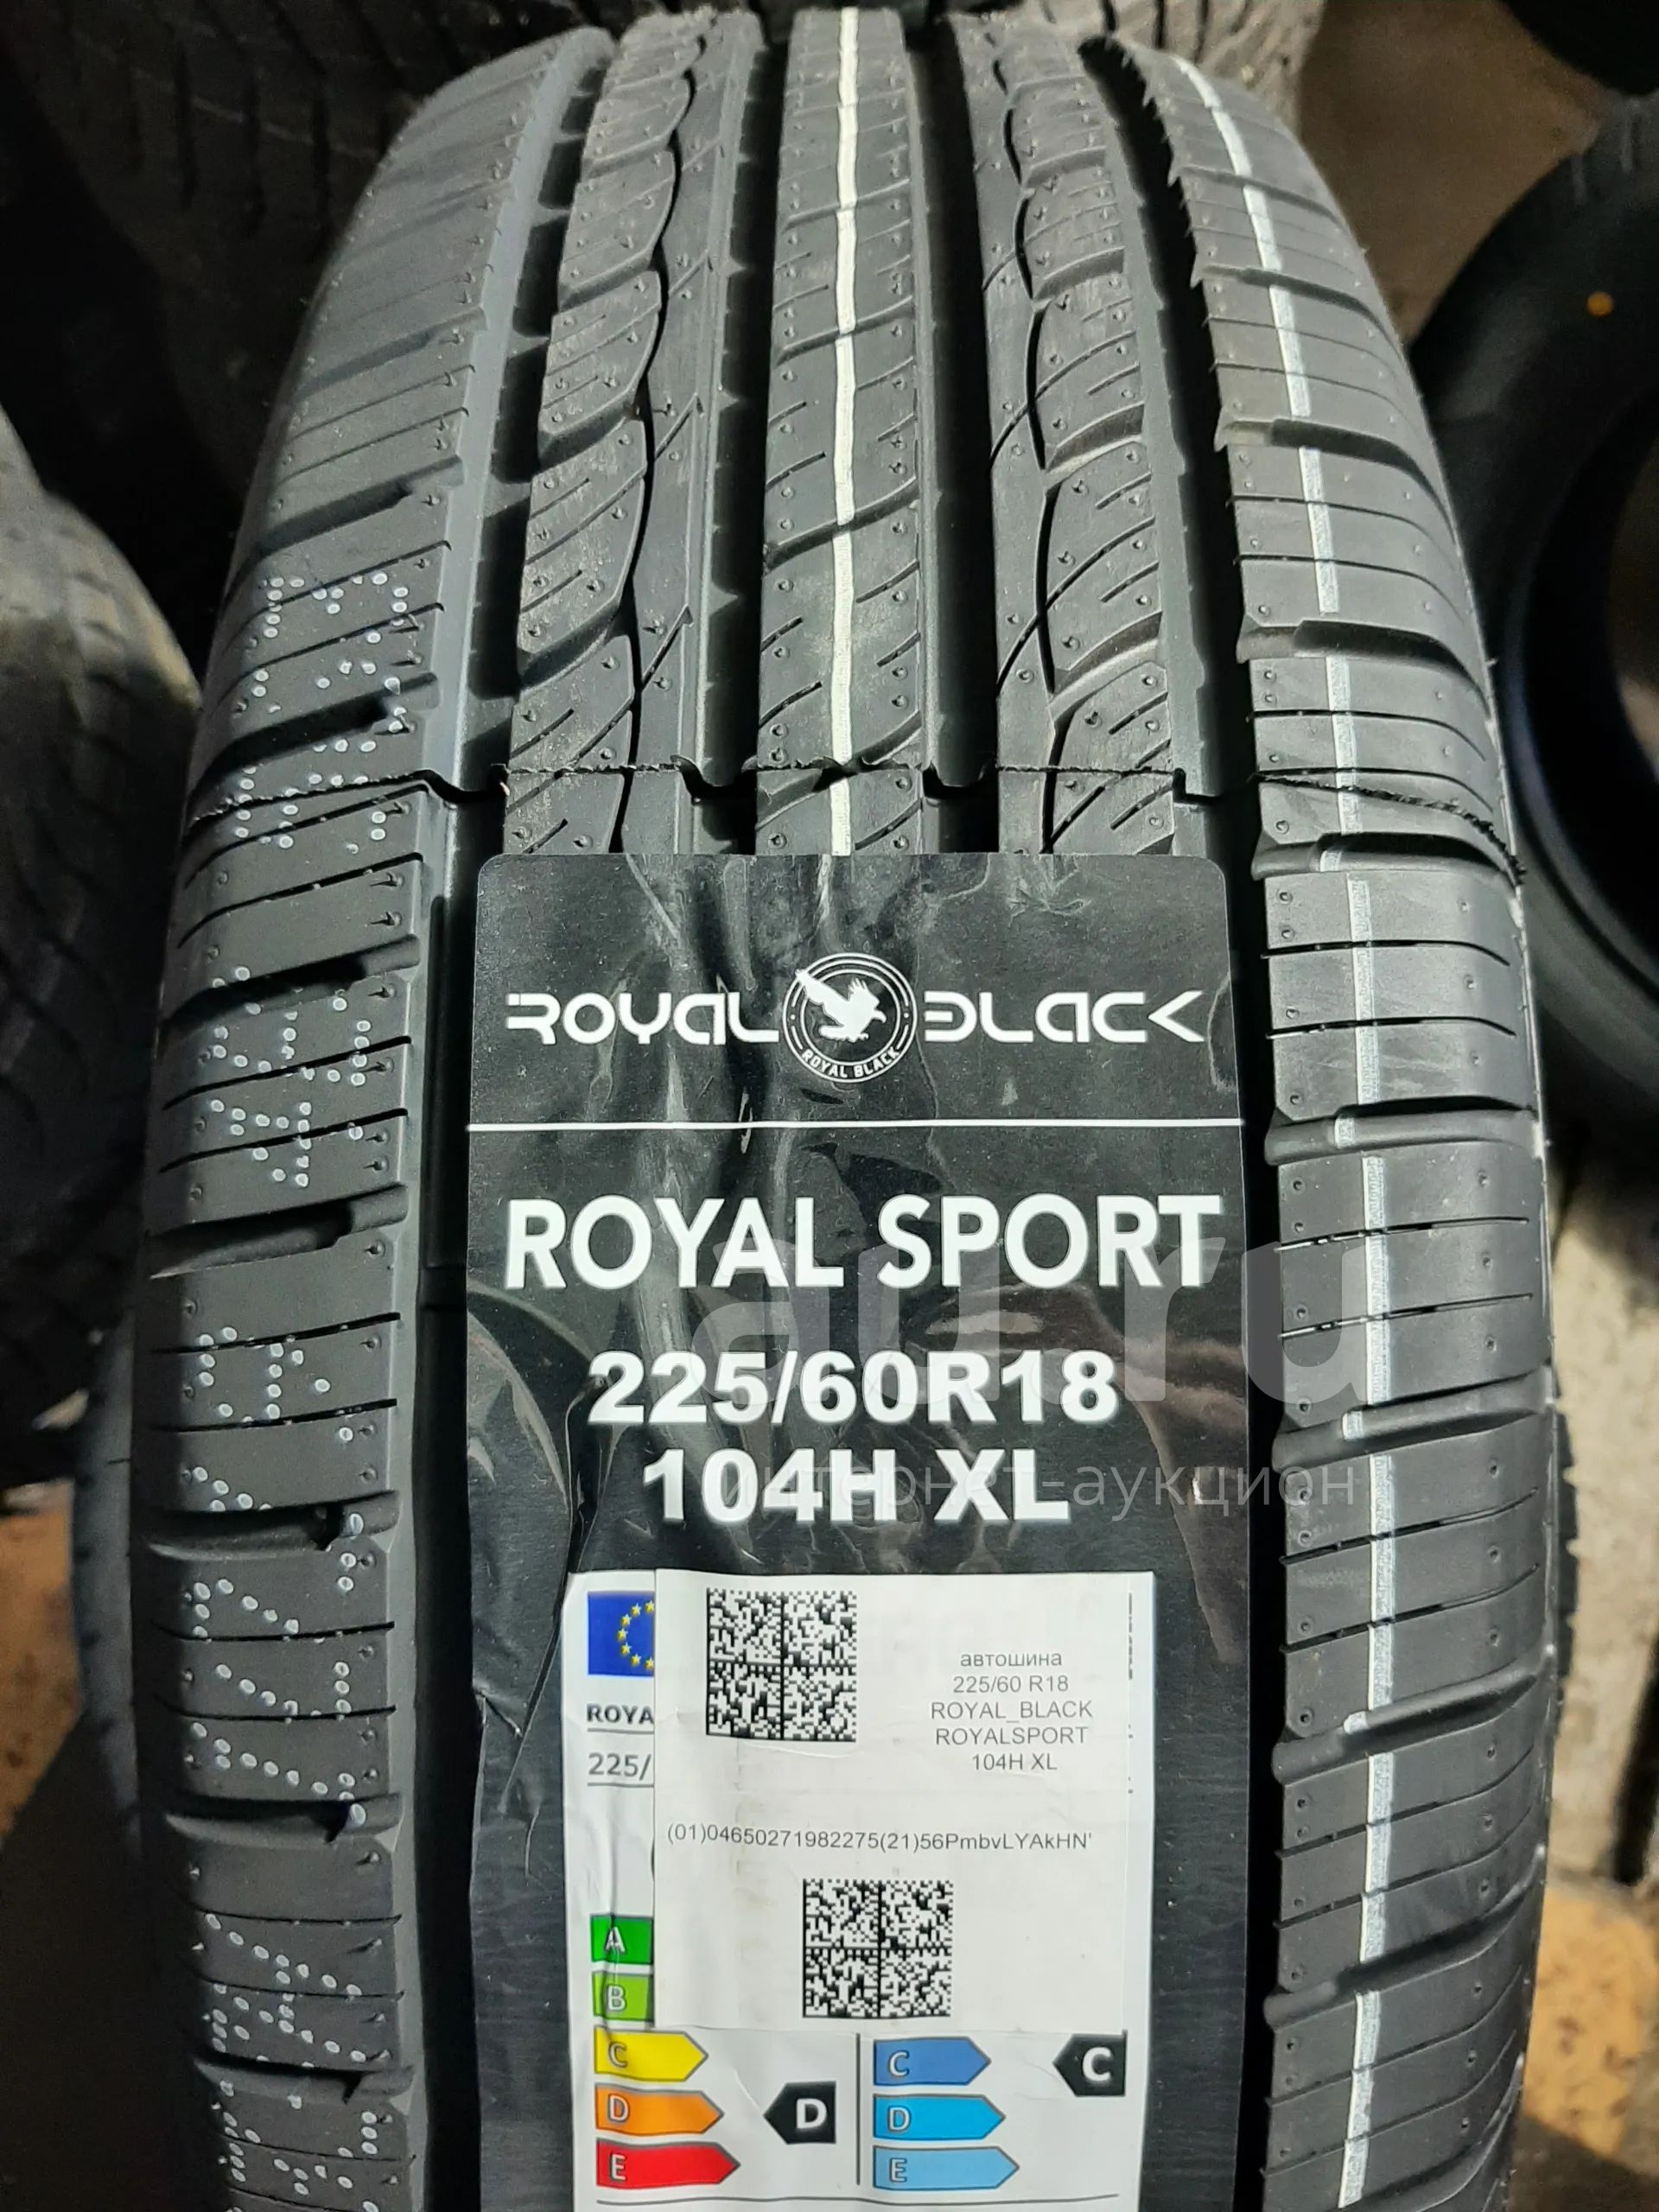 Шины Royal Black Royal Sport. Автошина Royal Black ROYALSPORT 225/60 r17 99h. Royal Black 225/55r18 Royal Sport 98h. Шины Роял Блэк летние маркировка.